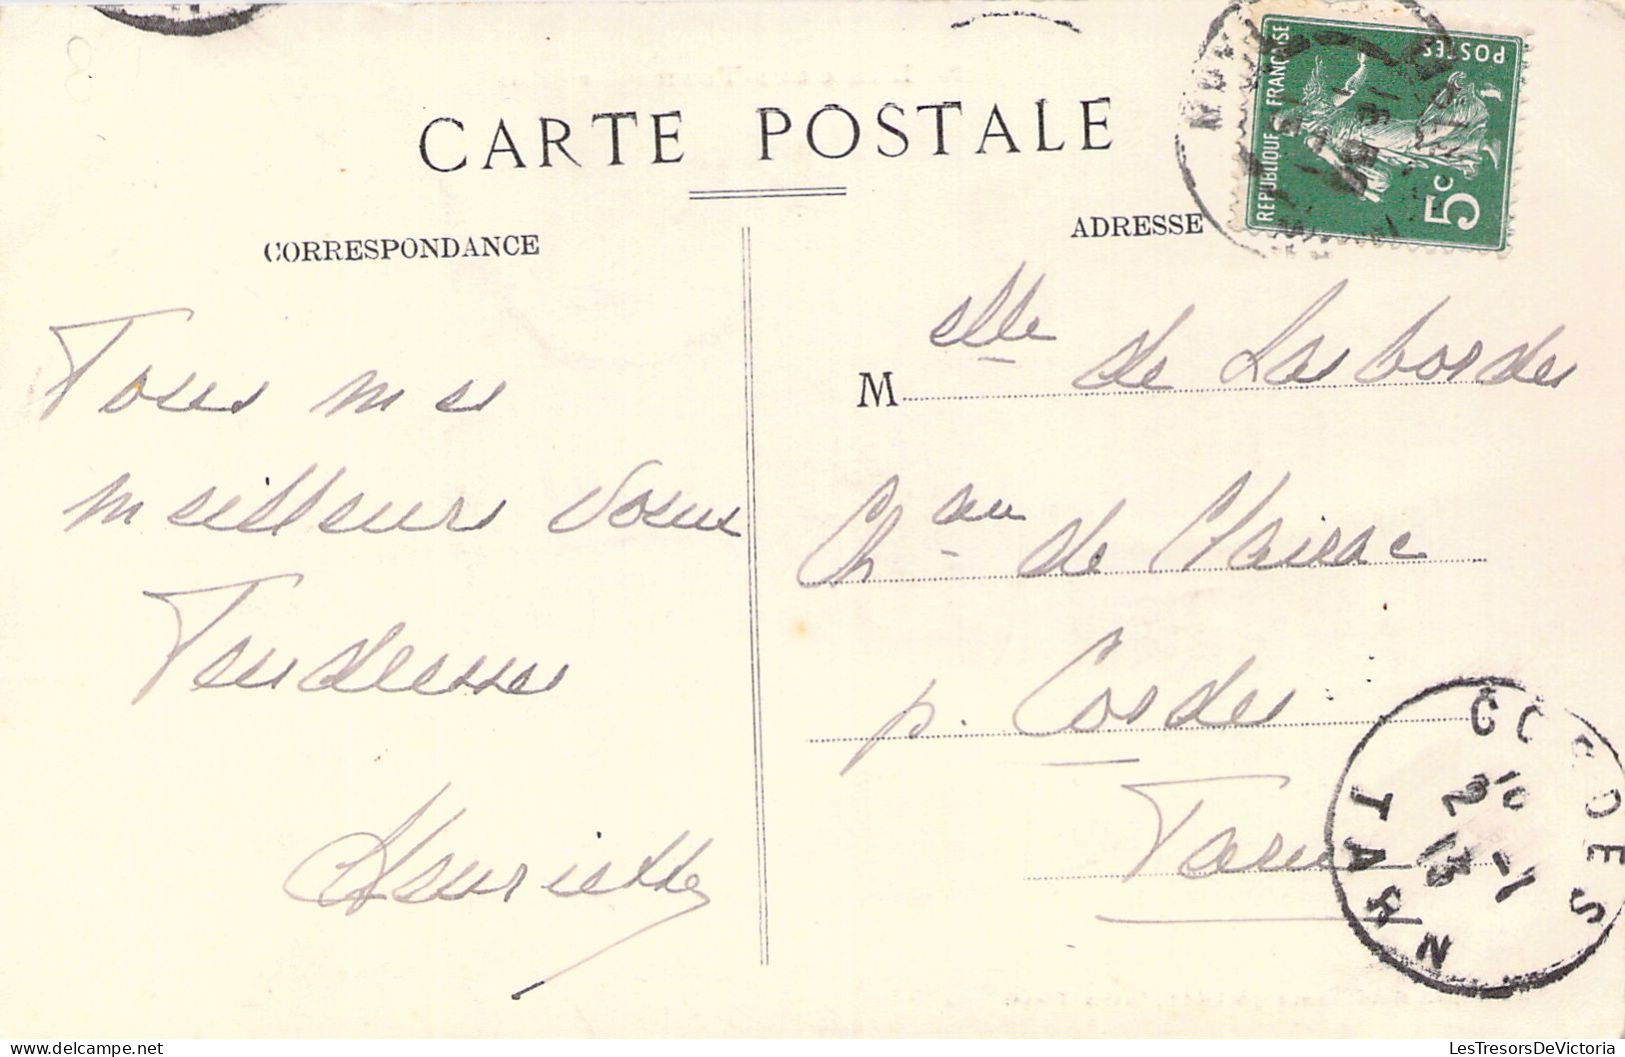 FRANCE - 81 - L'Isle Sur TARN - Le Palais - Carte Postale Ancienne - Lisle Sur Tarn